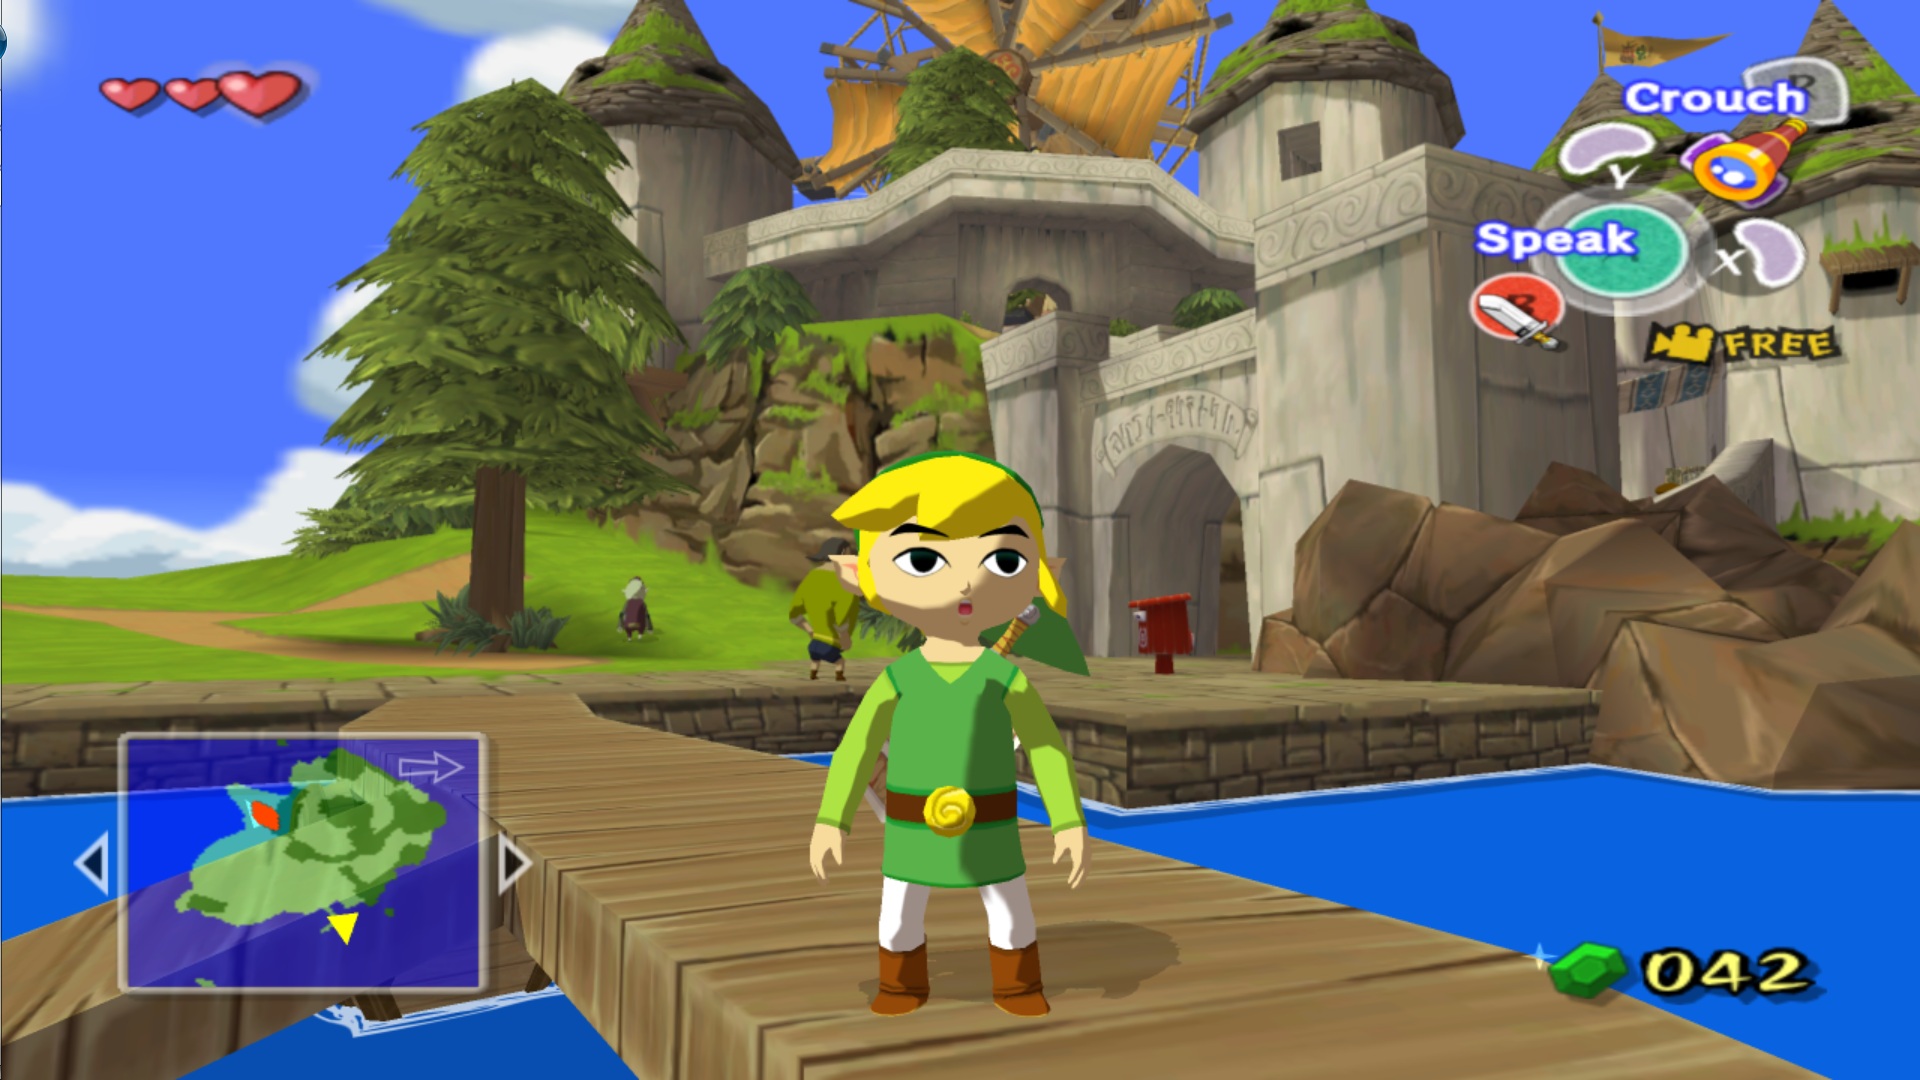 So why did Nintendo abandon the vibrant artstyle in Zelda Wind Waker?